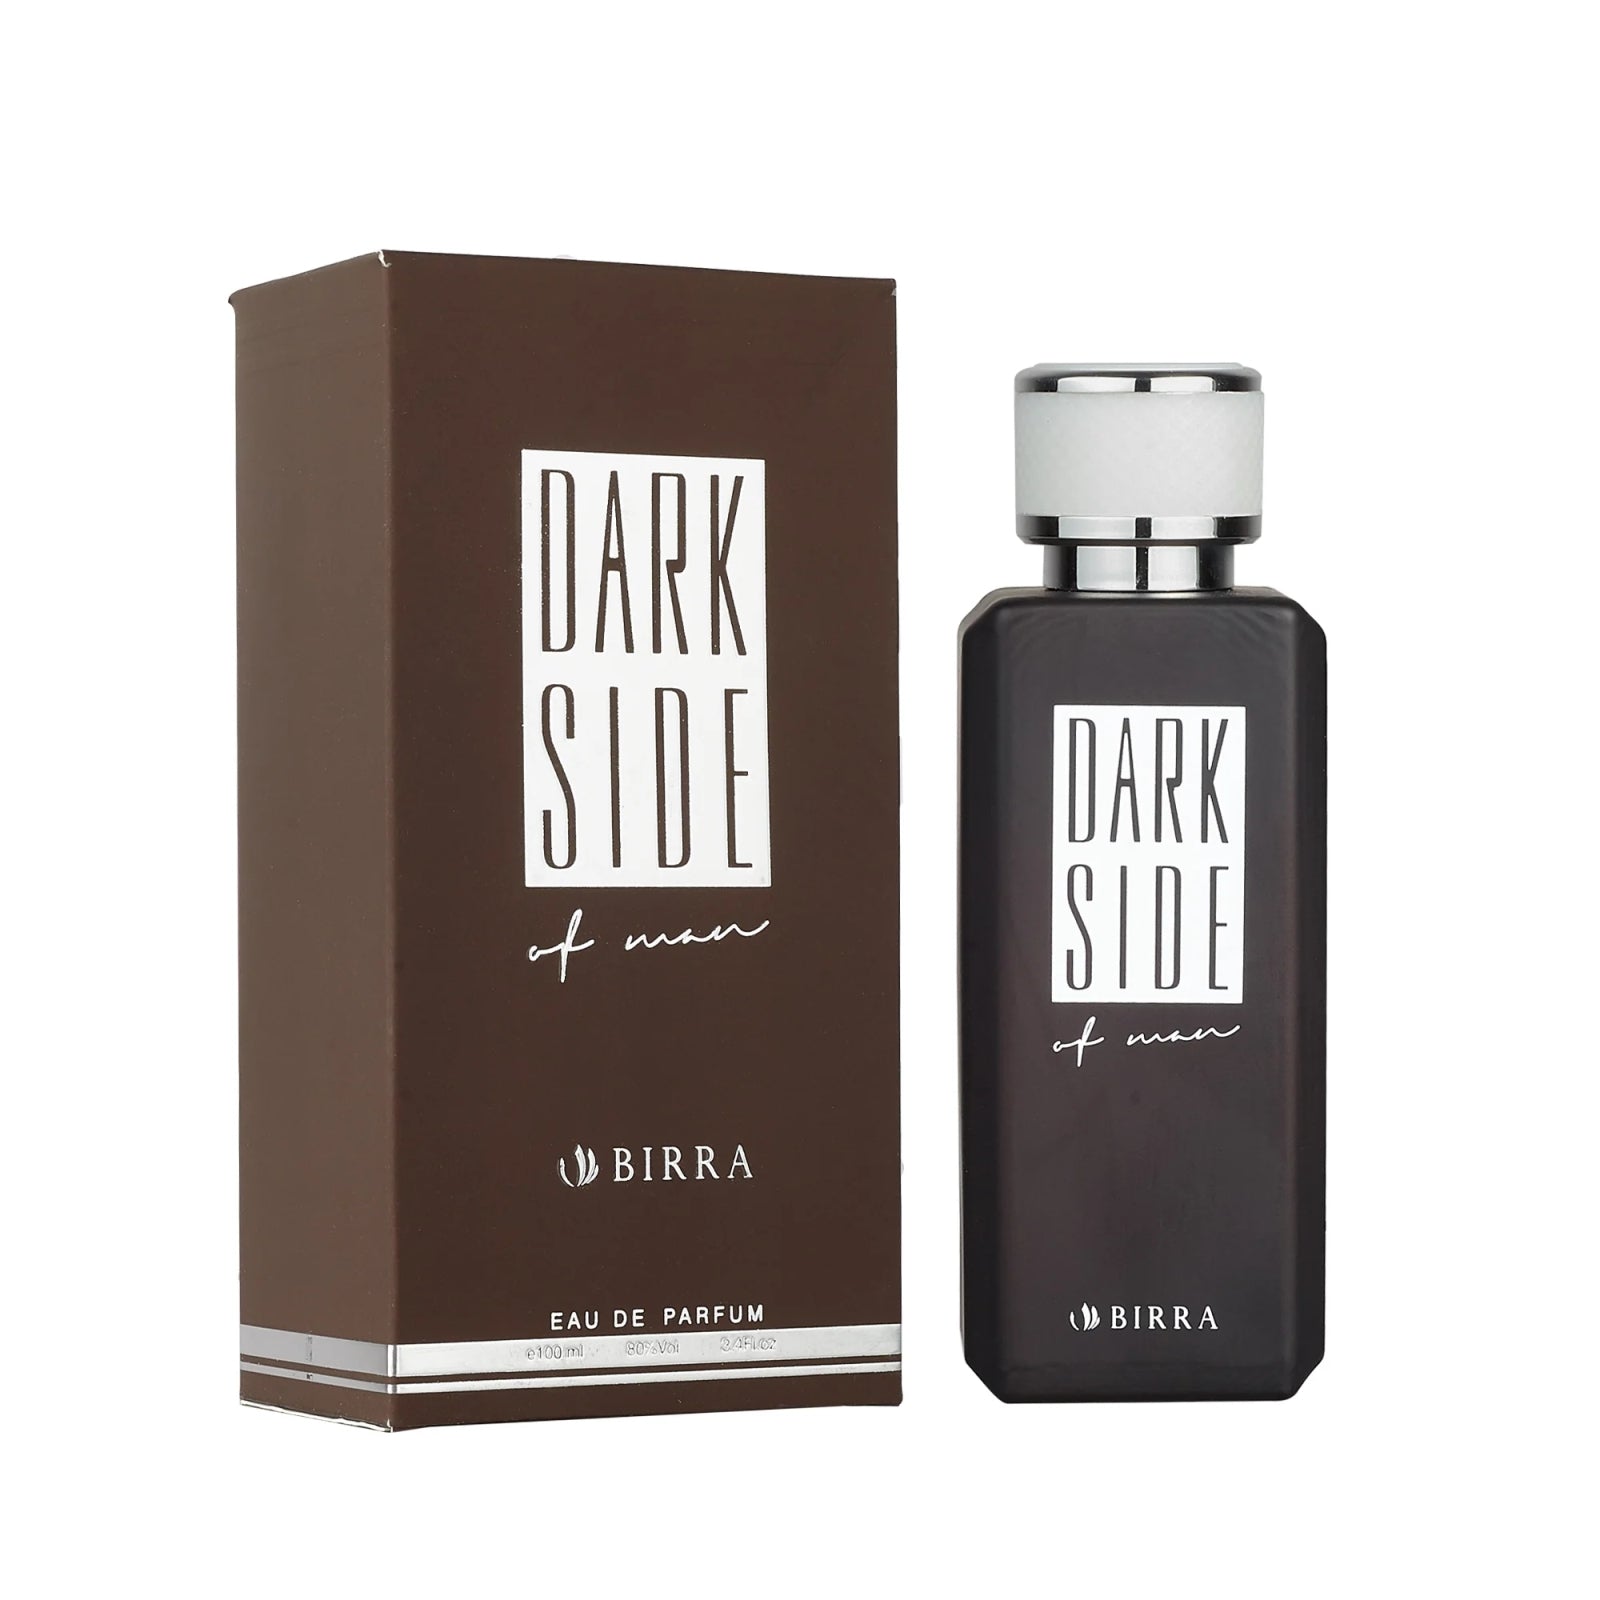 Darkside- Premium Perfume for Men